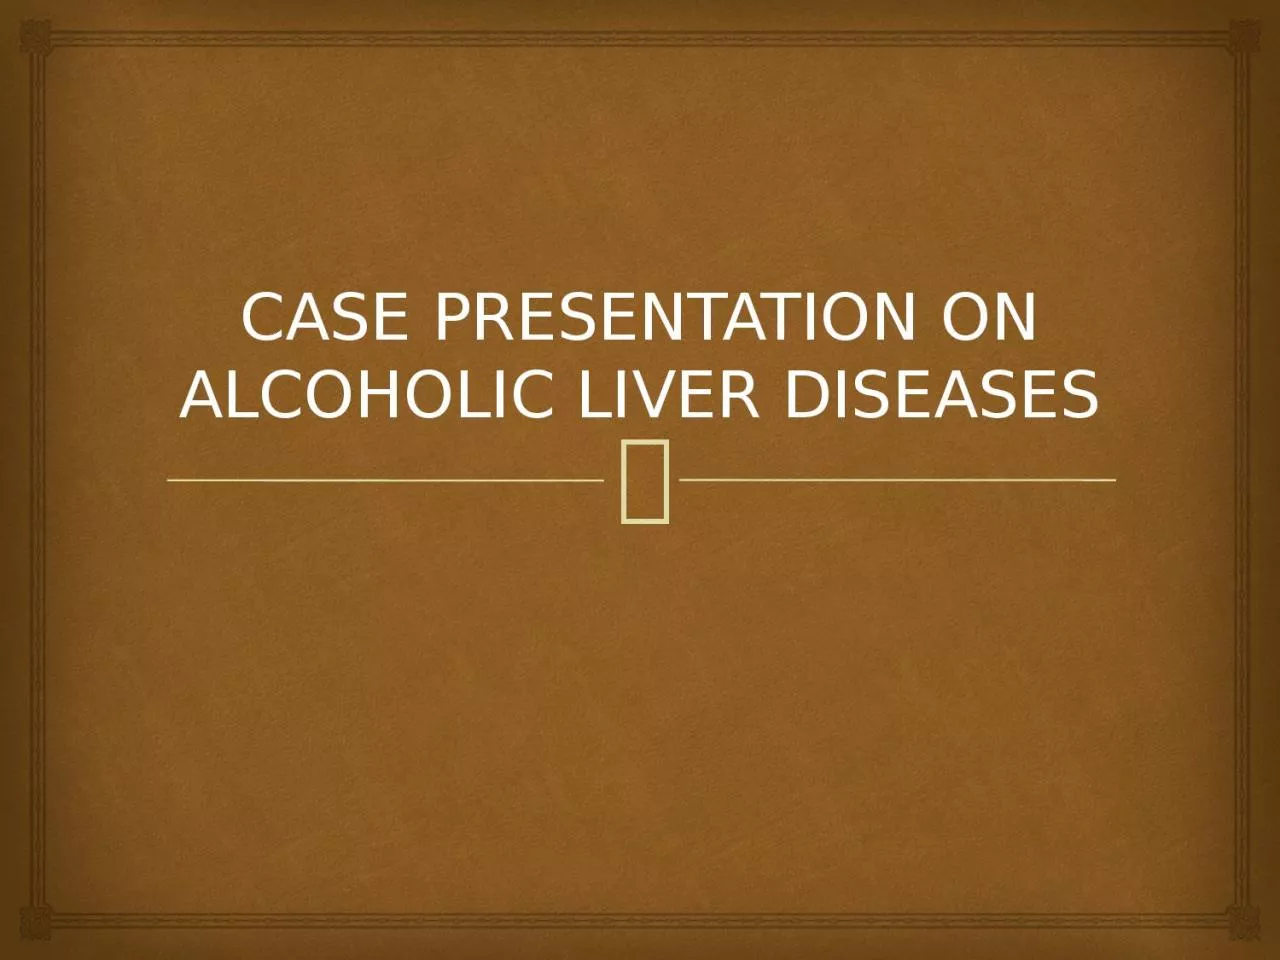 CASE PRESENTATION ON ALCOHOLIC LIVER DISEASES